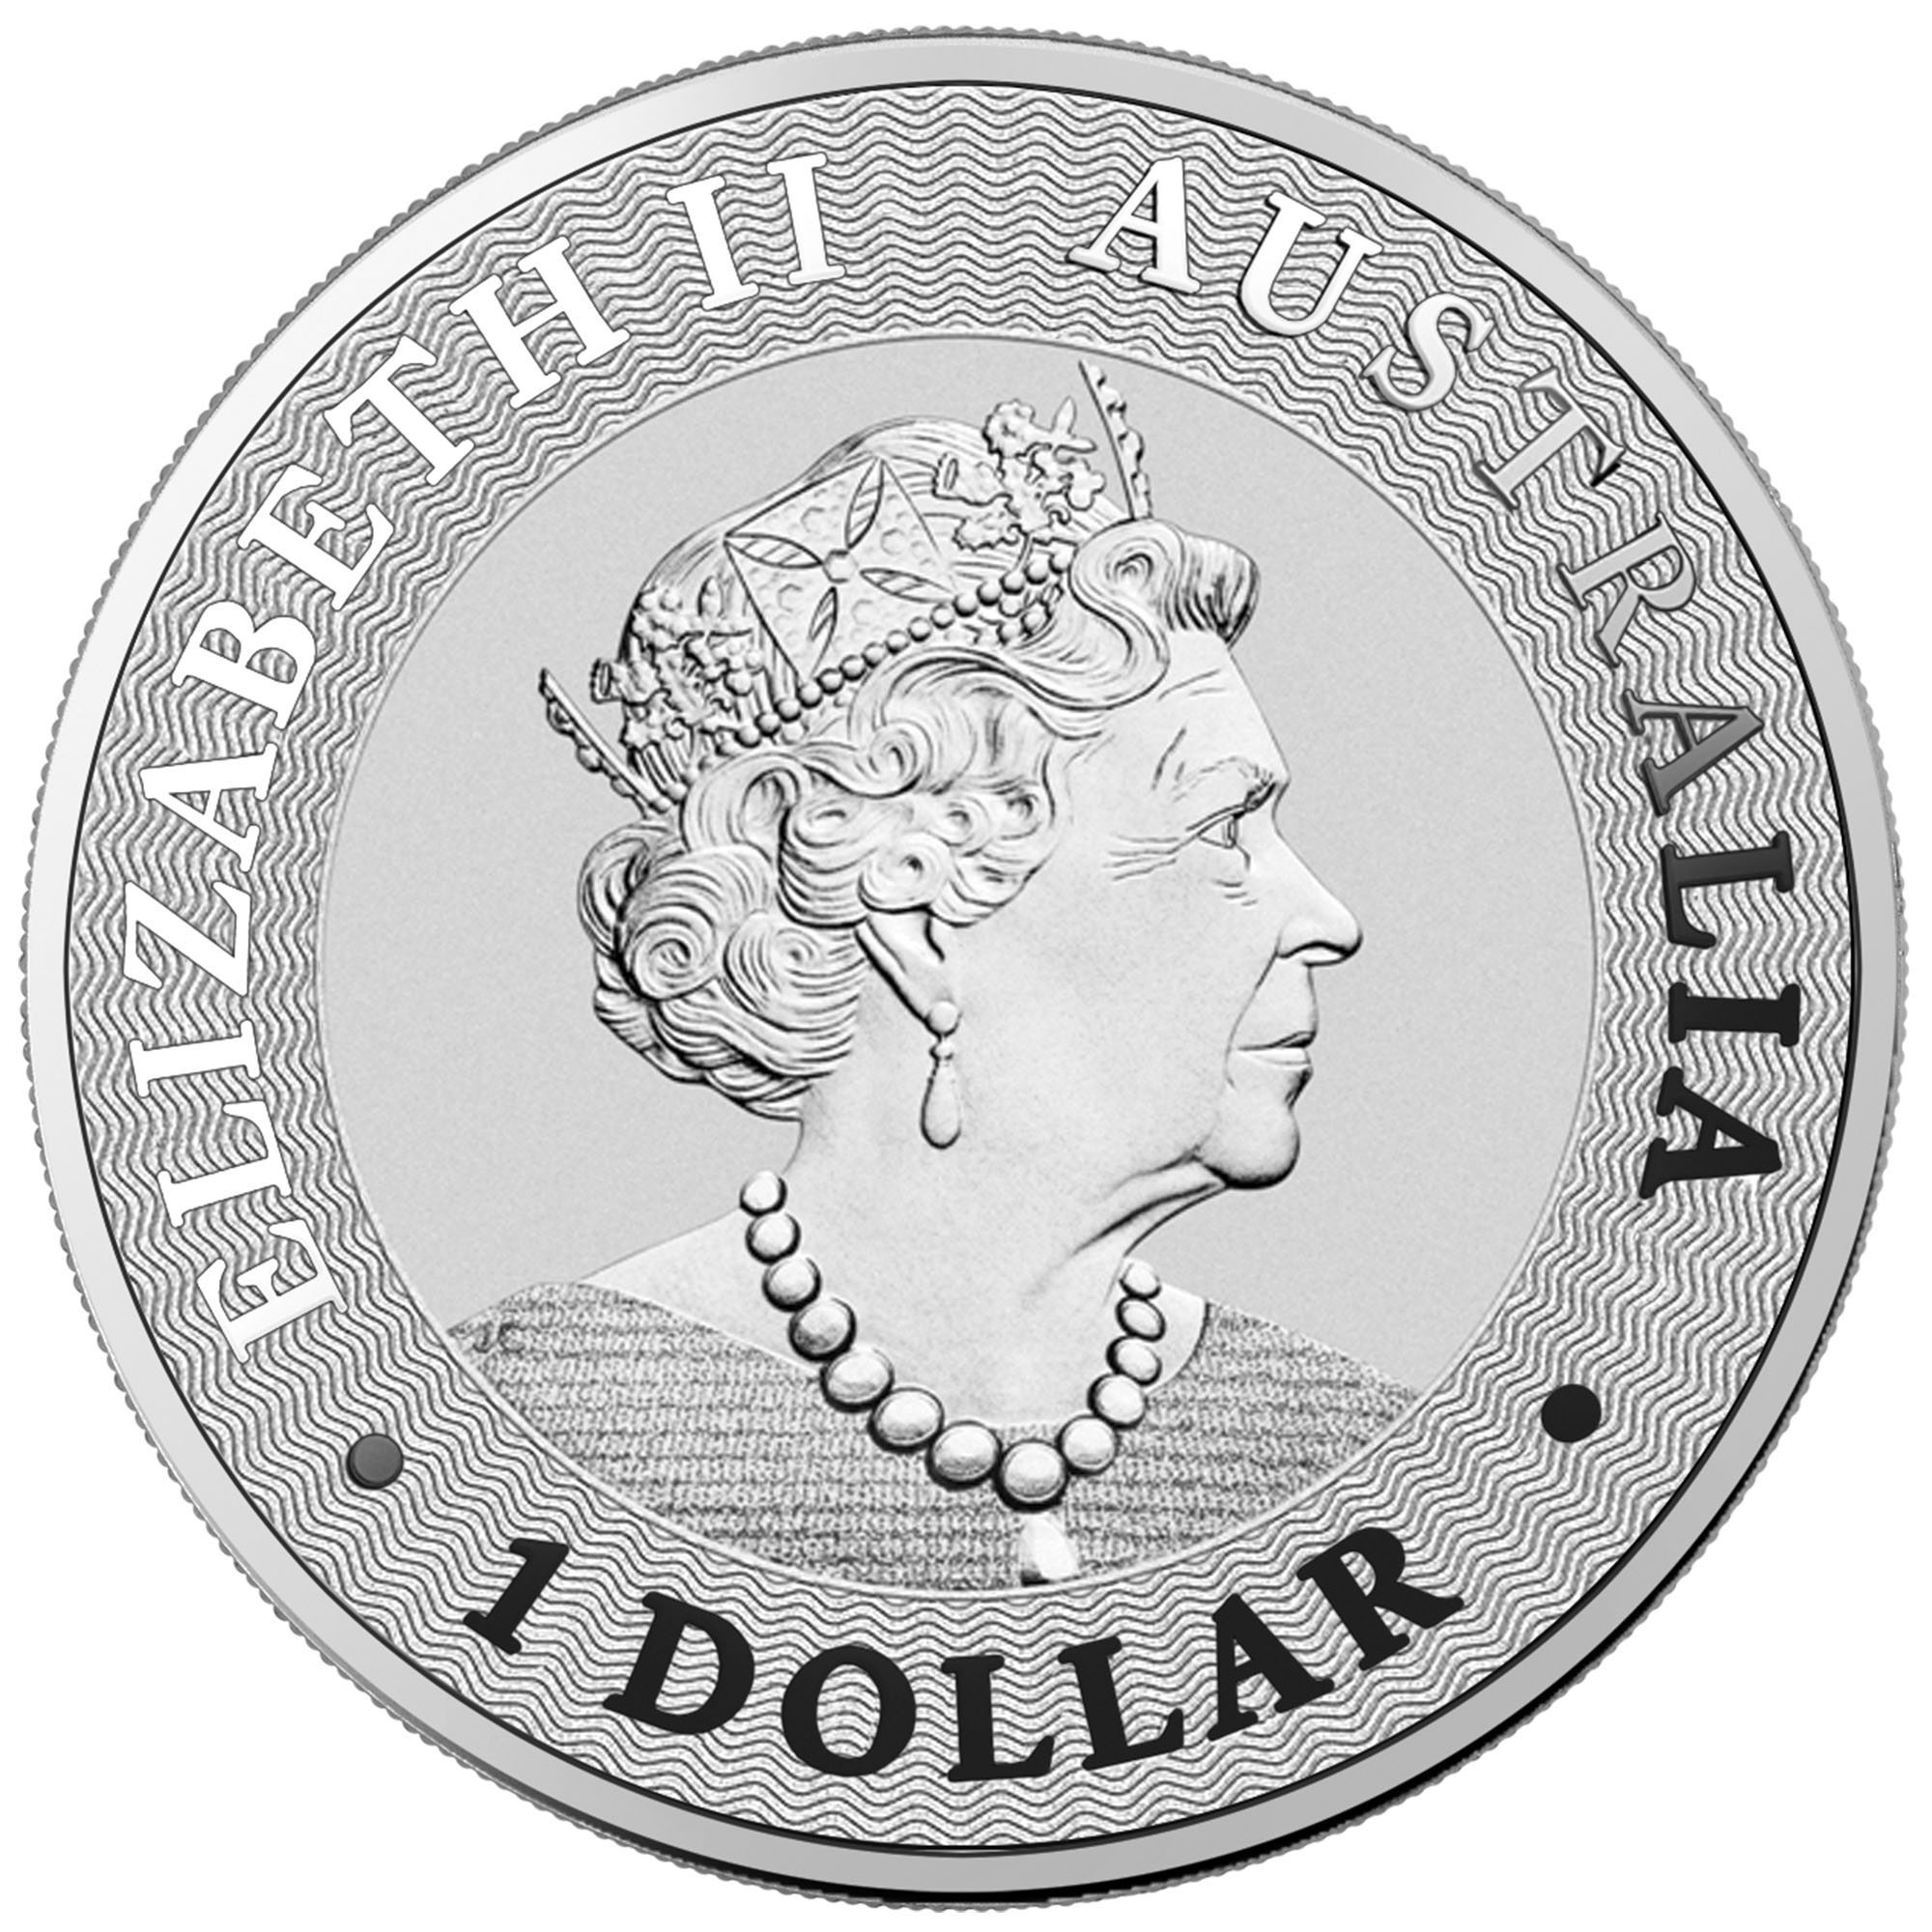 2022 early issue australian silver dollar set A22 a Main